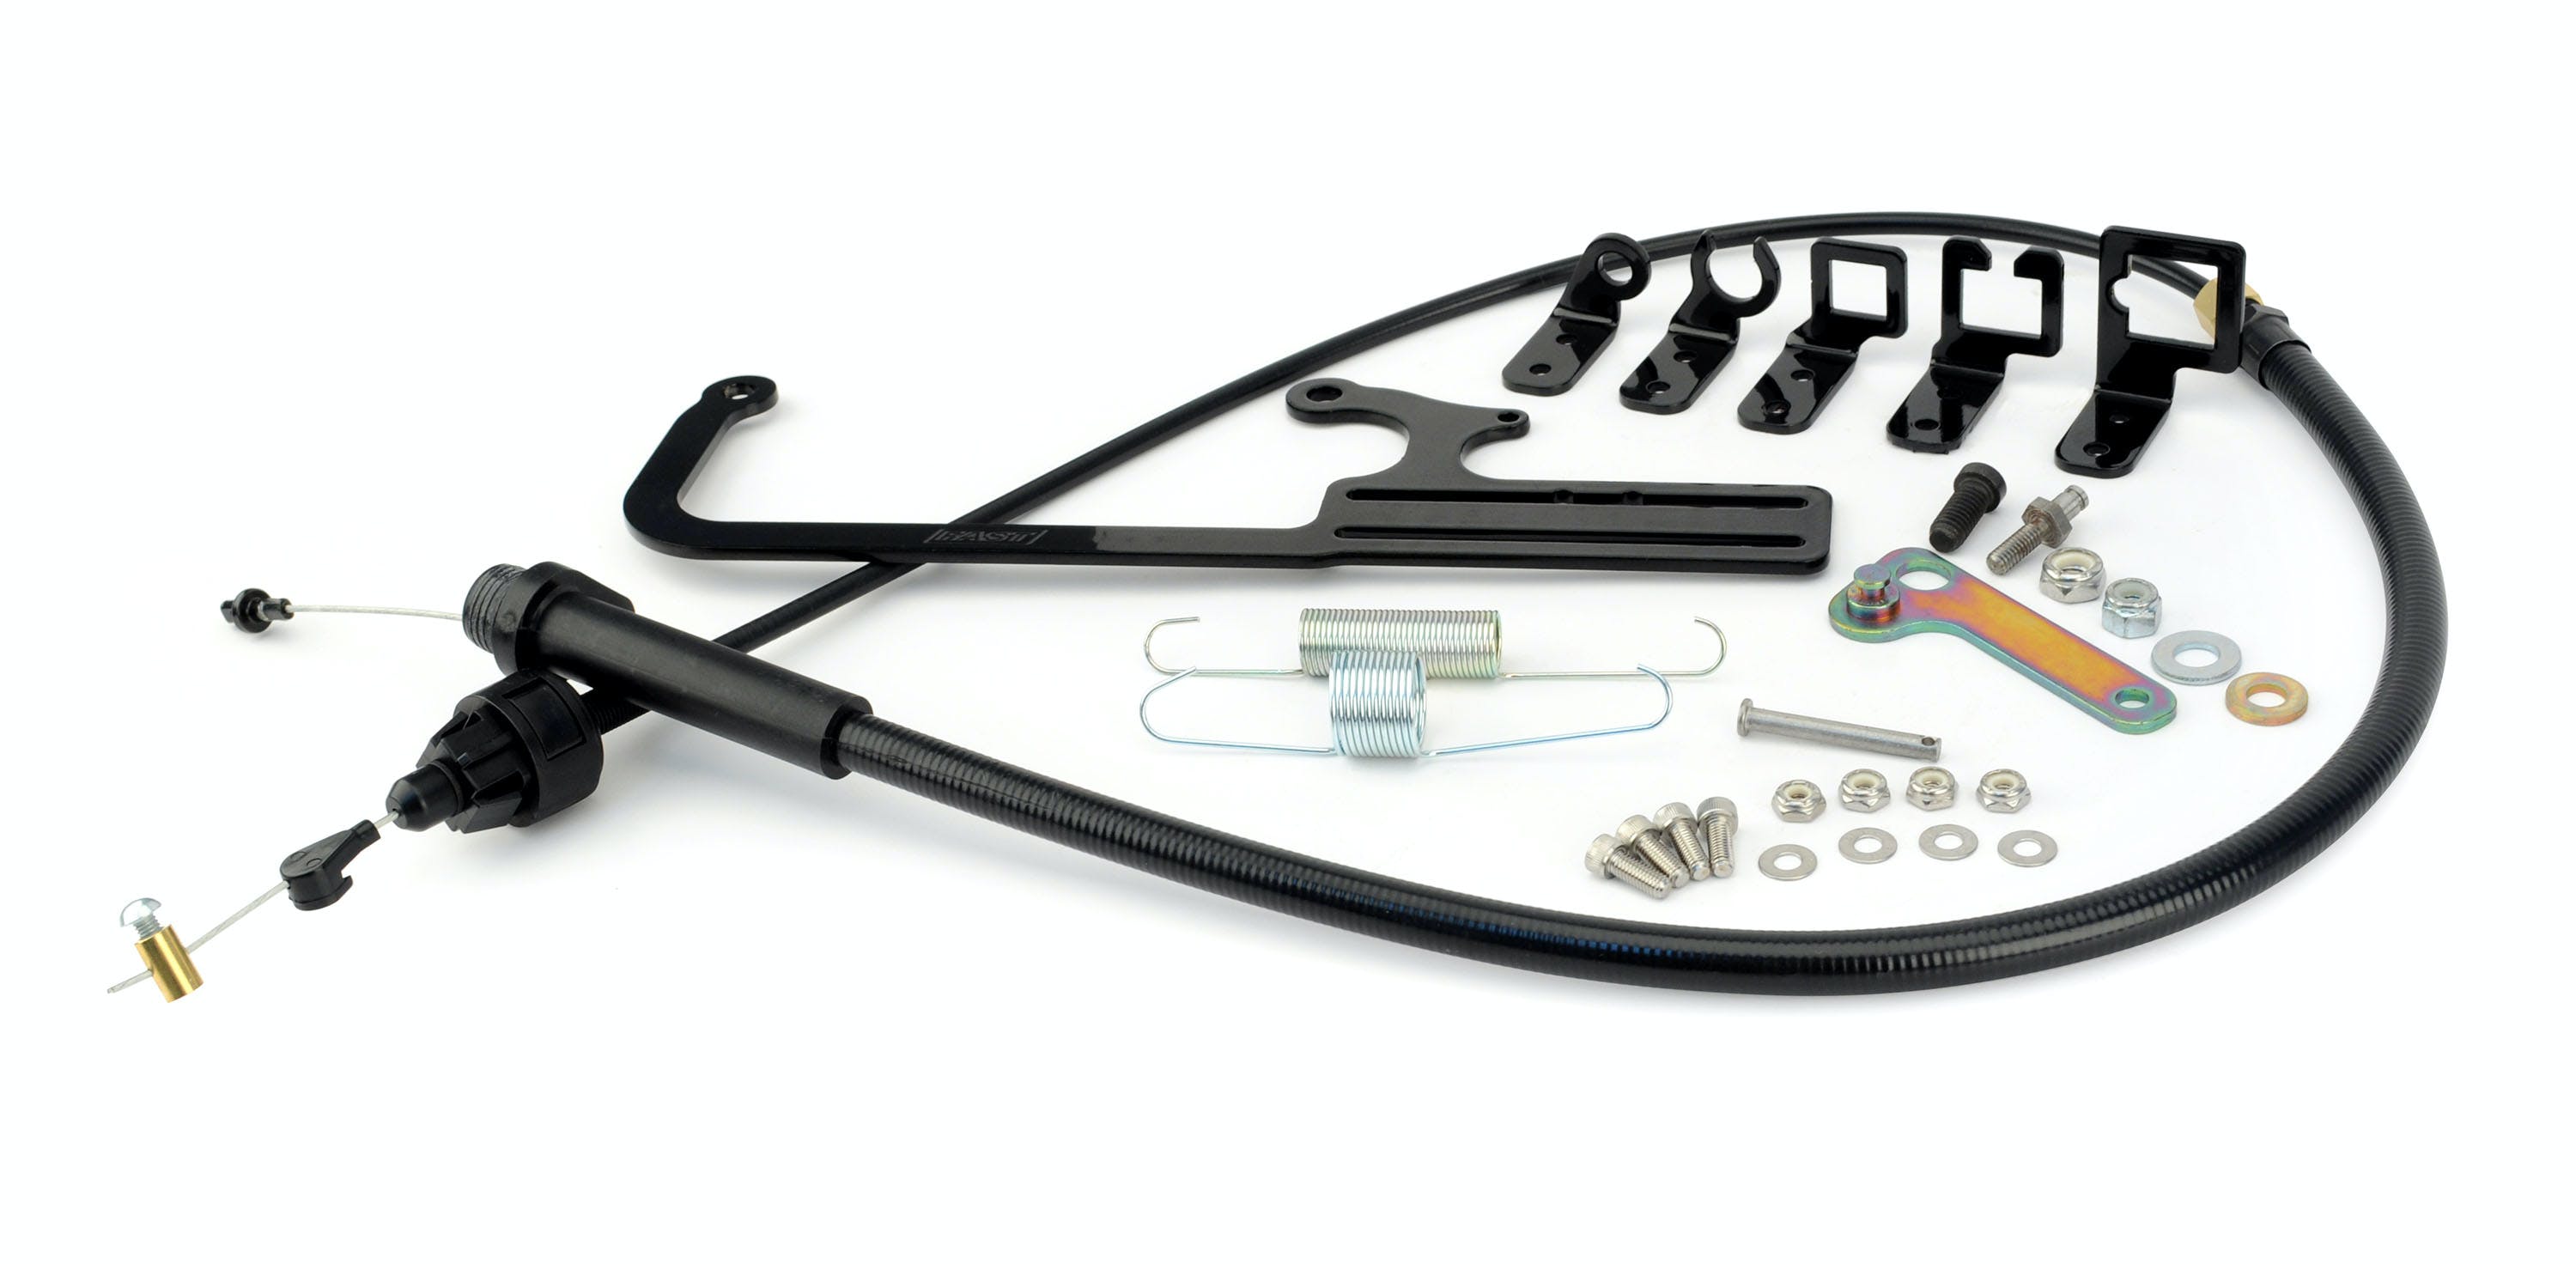 TCI Automotive 370815 Premium TV Cable Corrector Kit for Edelbrock Carburetors